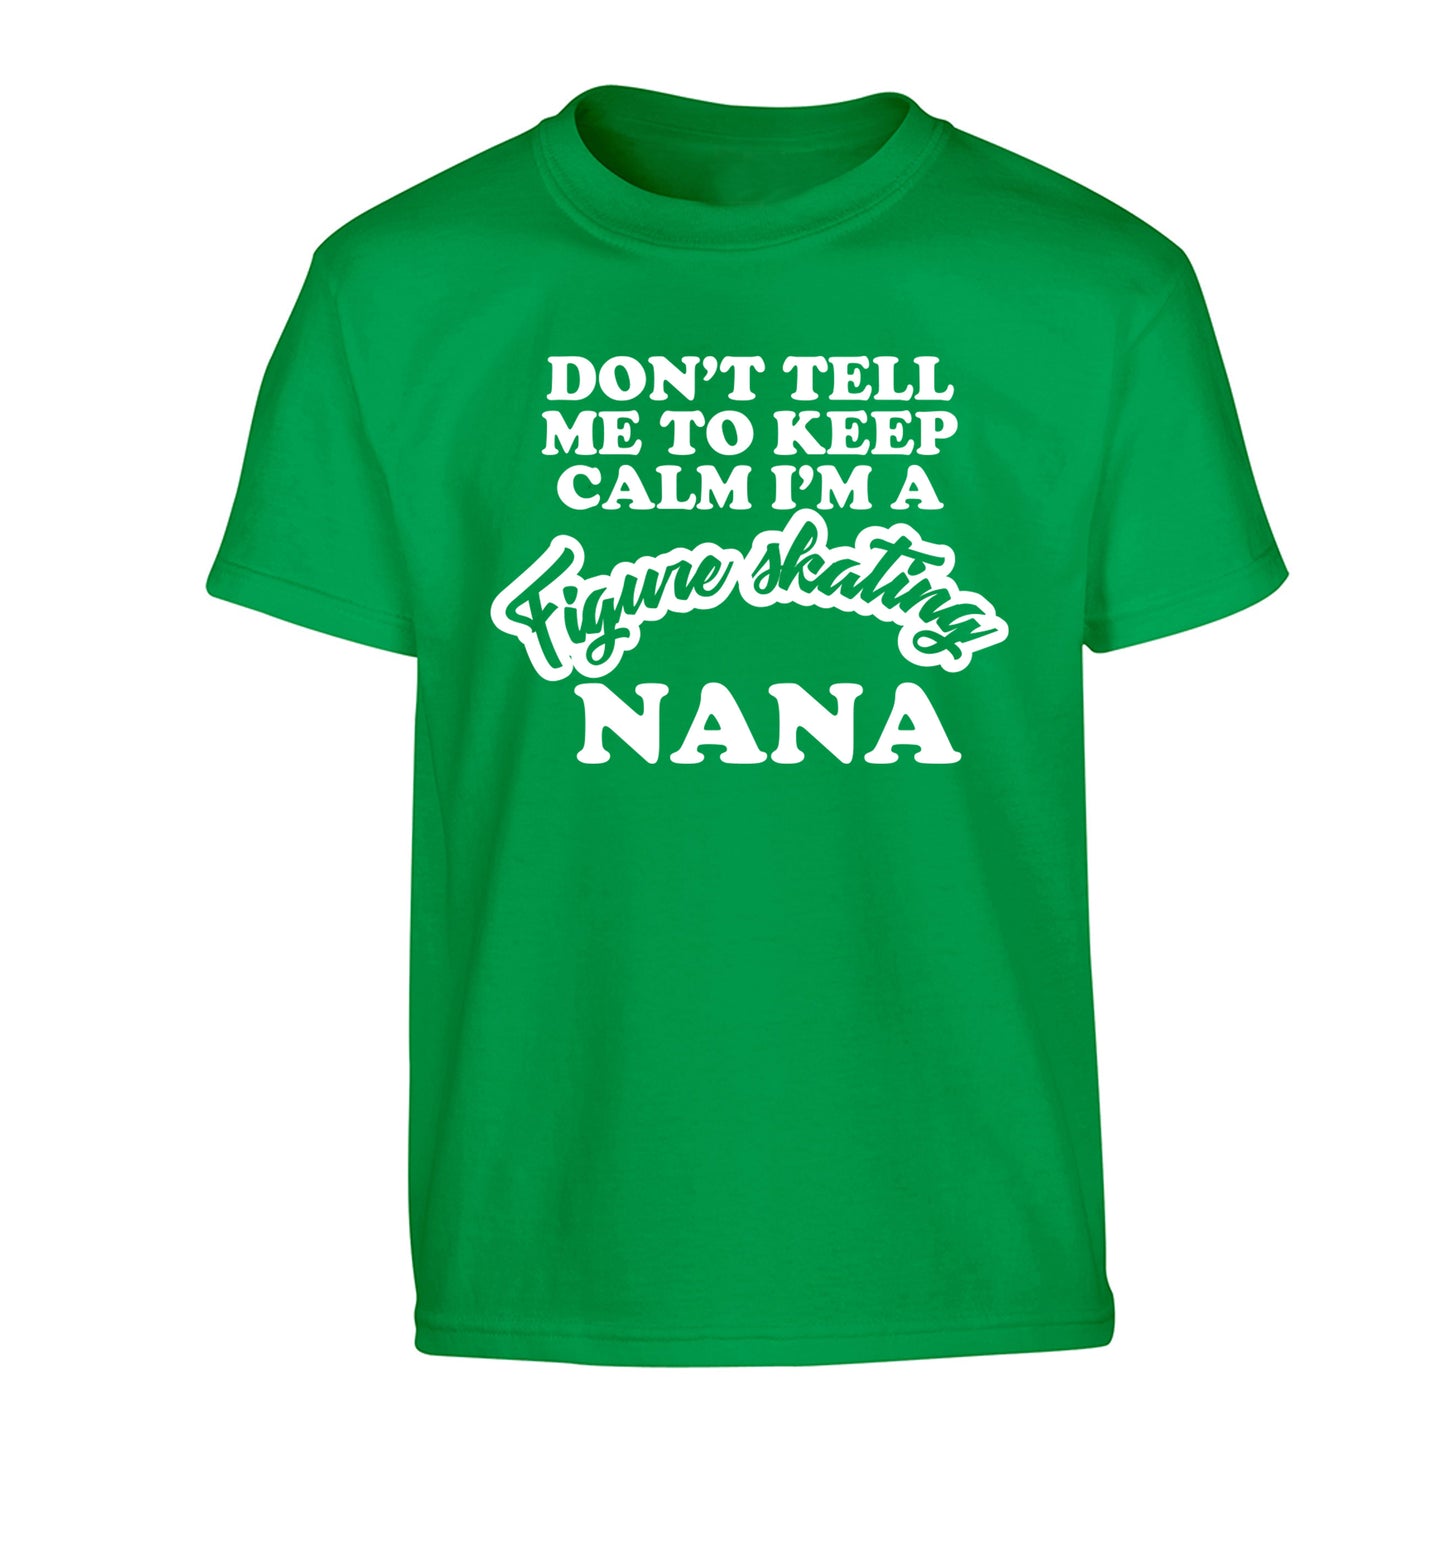 Don't tell me to keep calm I'm a figure skating nana Children's green Tshirt 12-14 Years